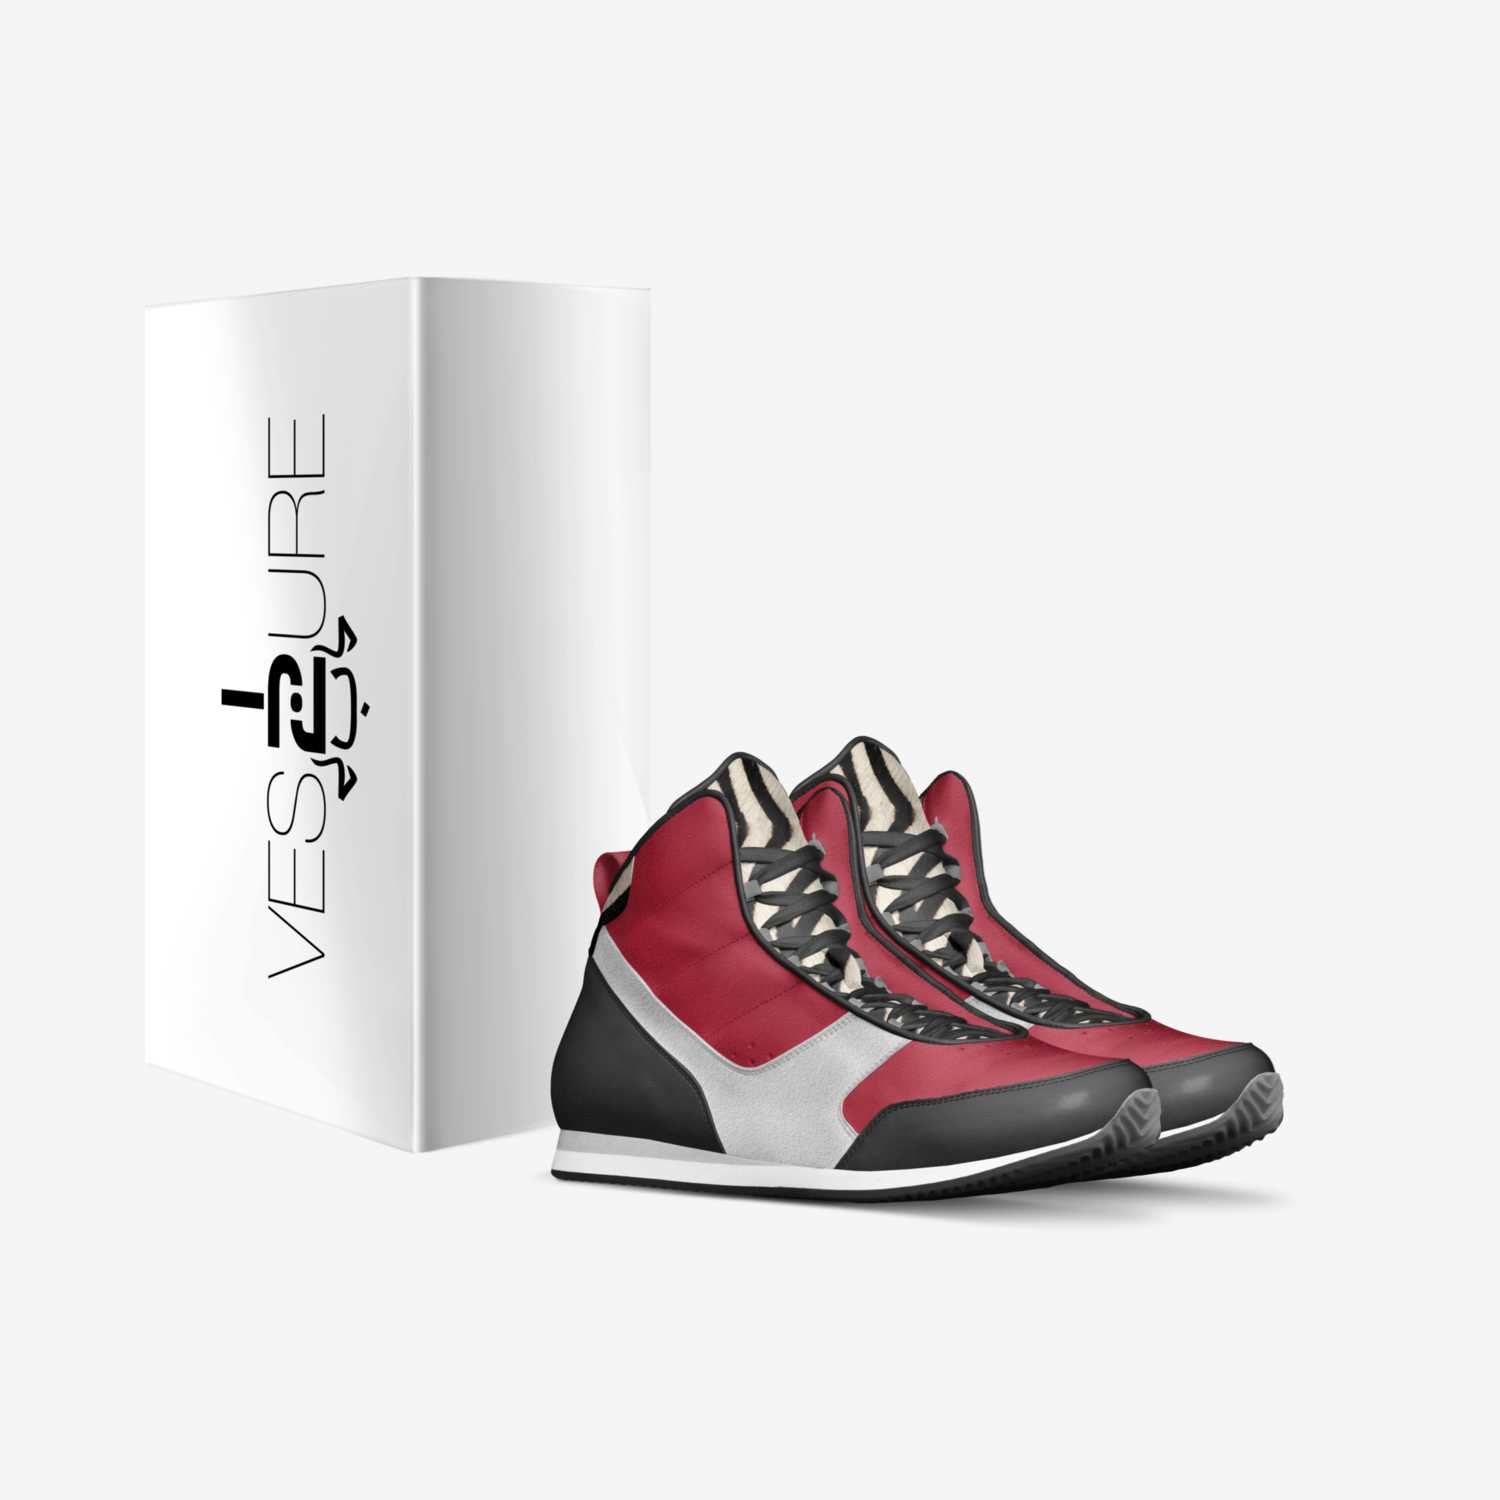 Ves2ure 7 custom made in Italy shoes by Jordan Warren Jr | Box view